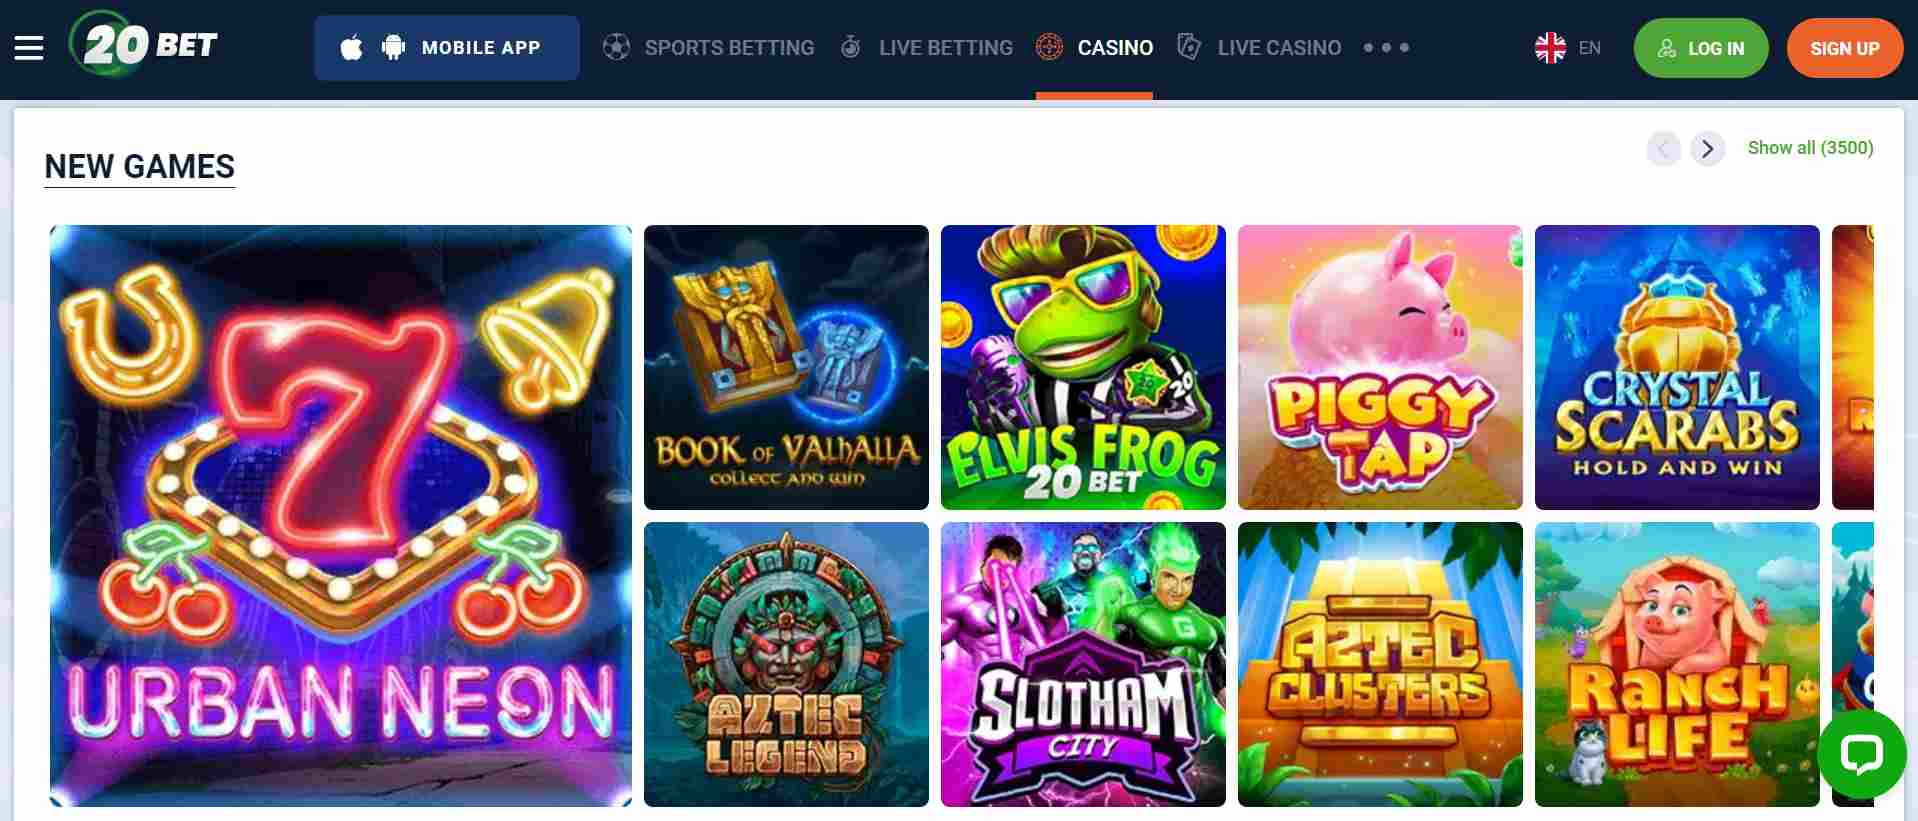 20bet casino games